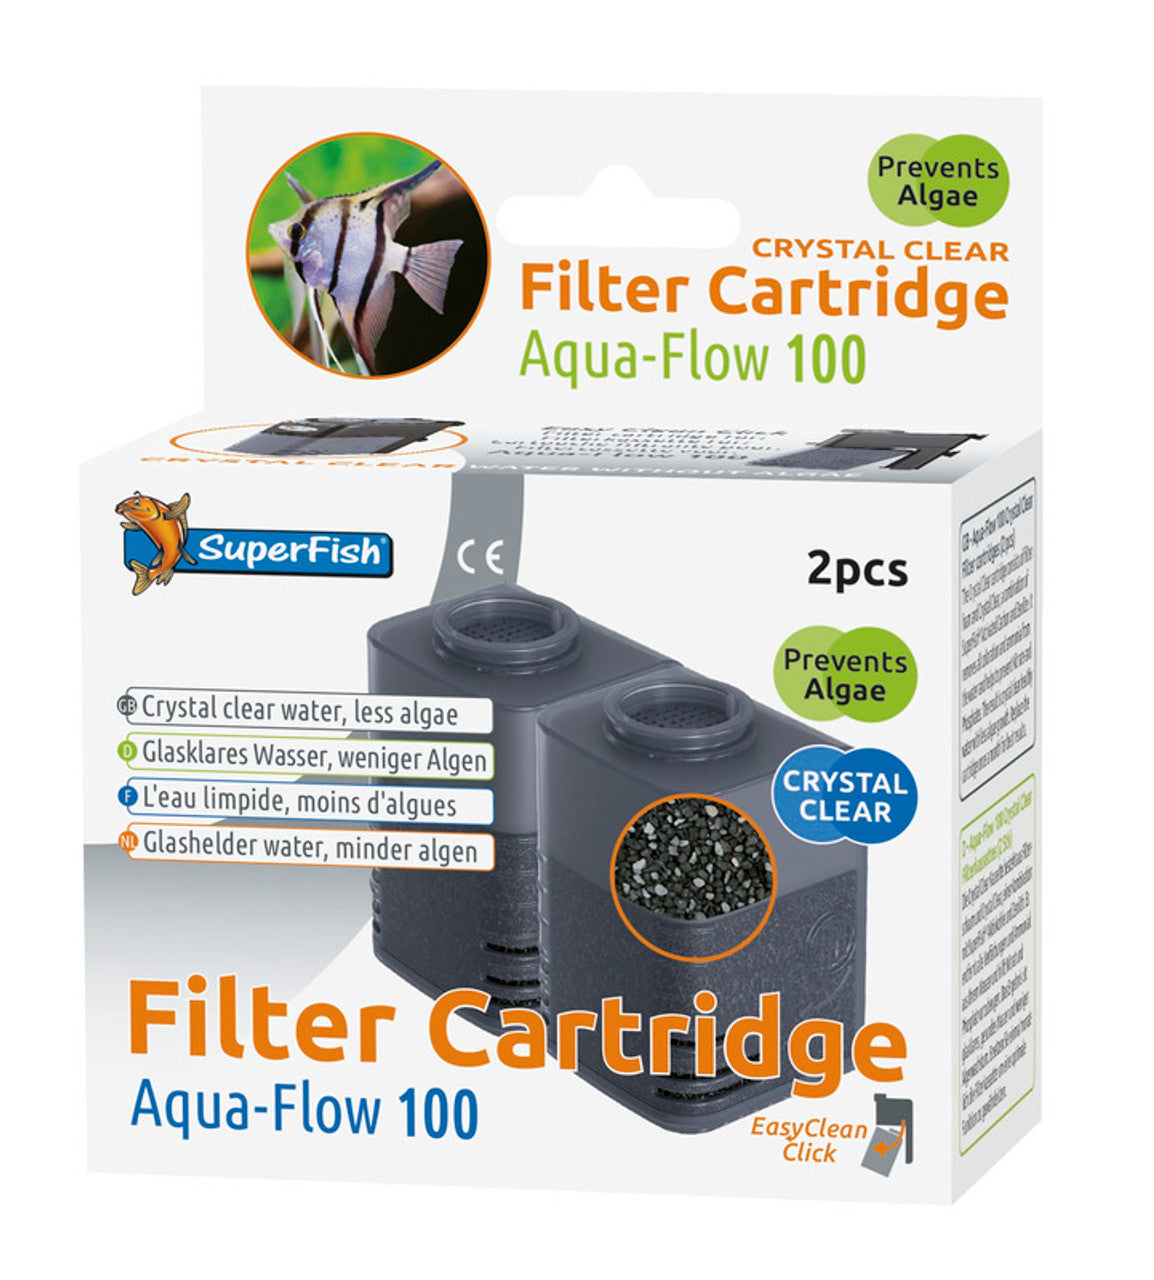 SuperFish Aqua-Flow 100 Crystal Clear Cartridges (2pcs)